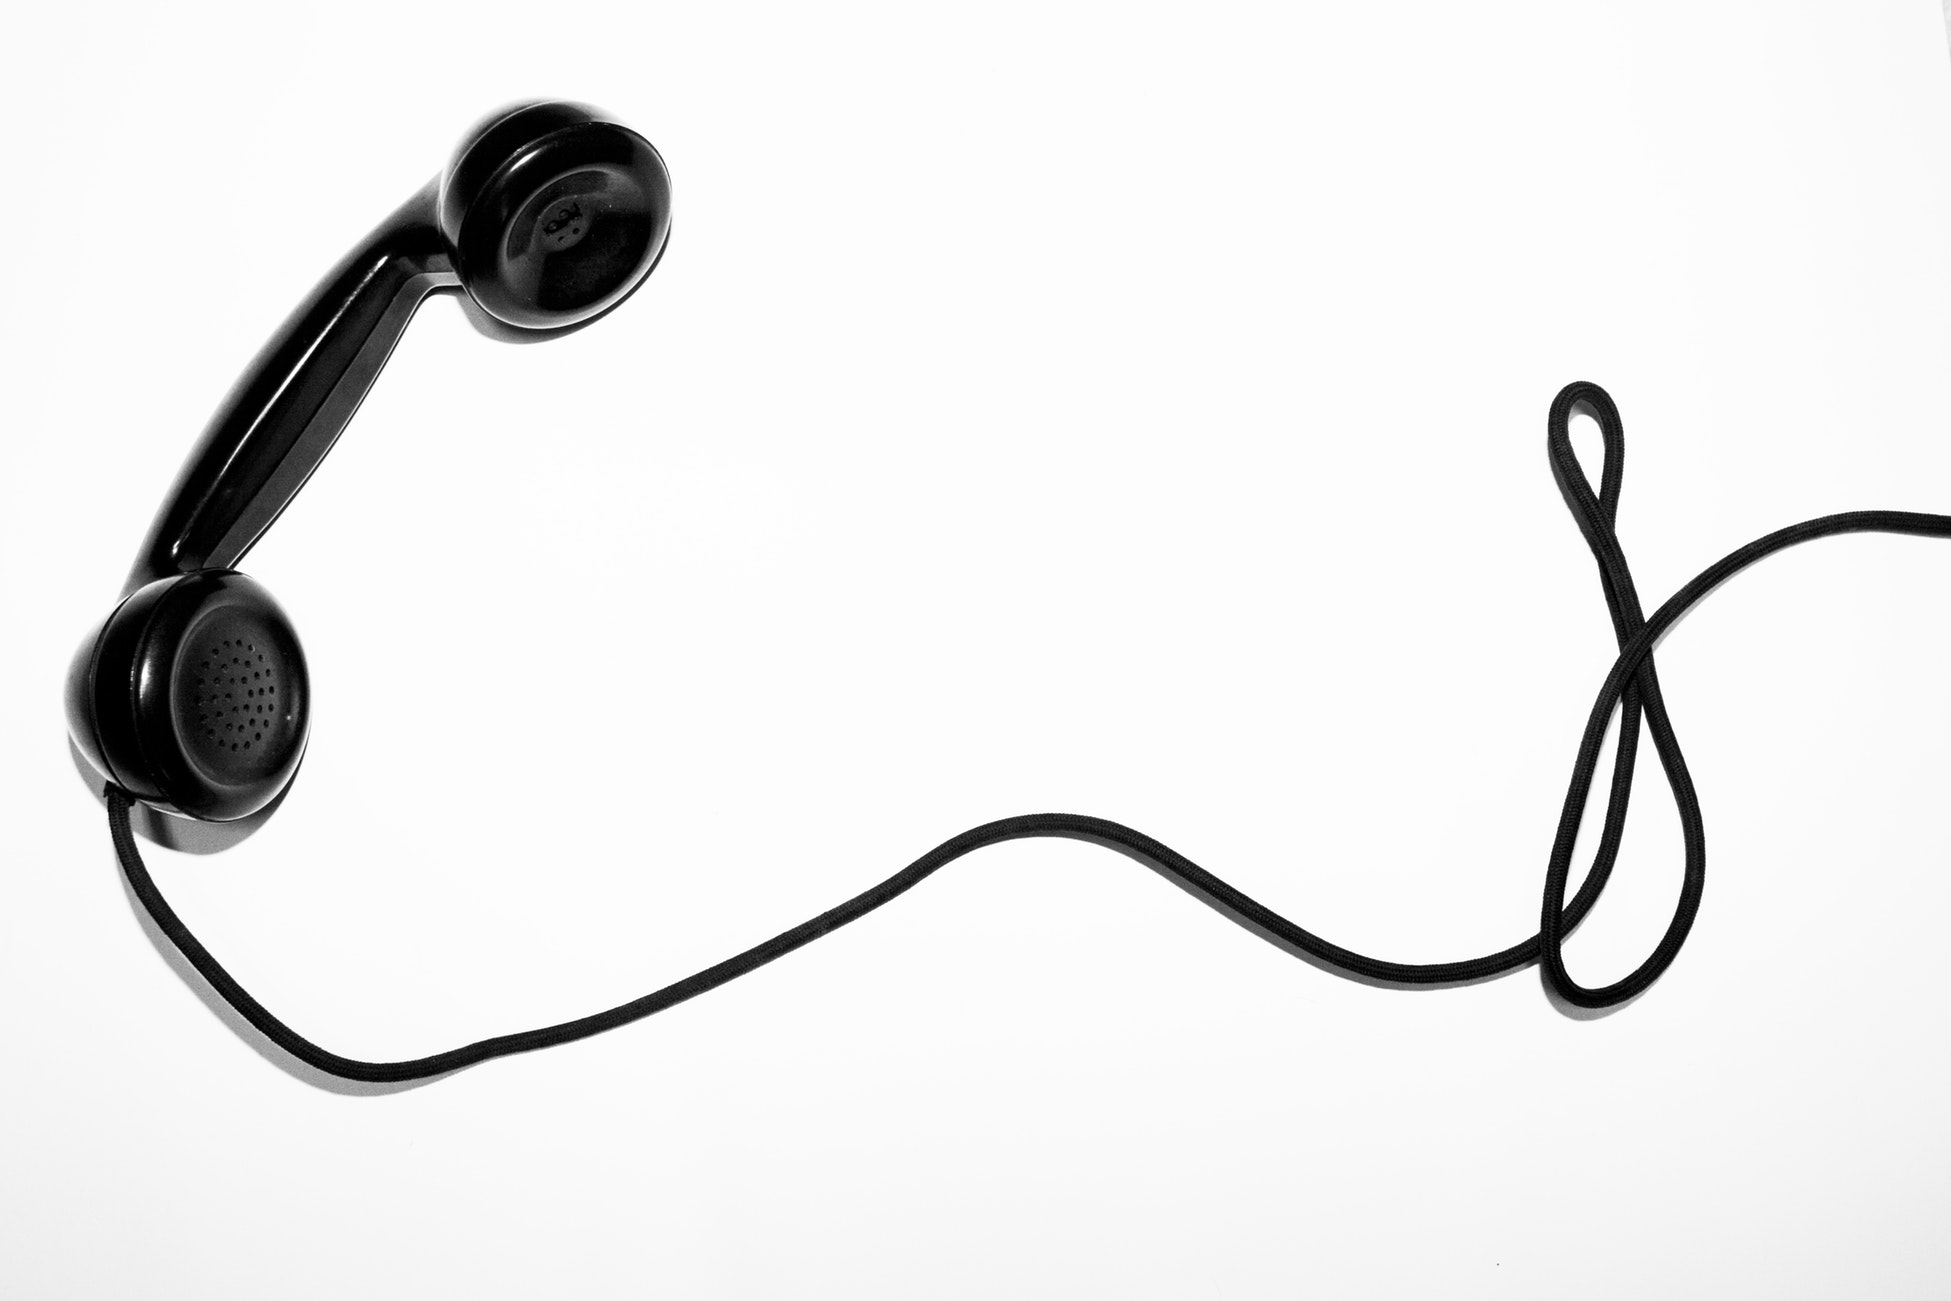 A black telephone on a cord.